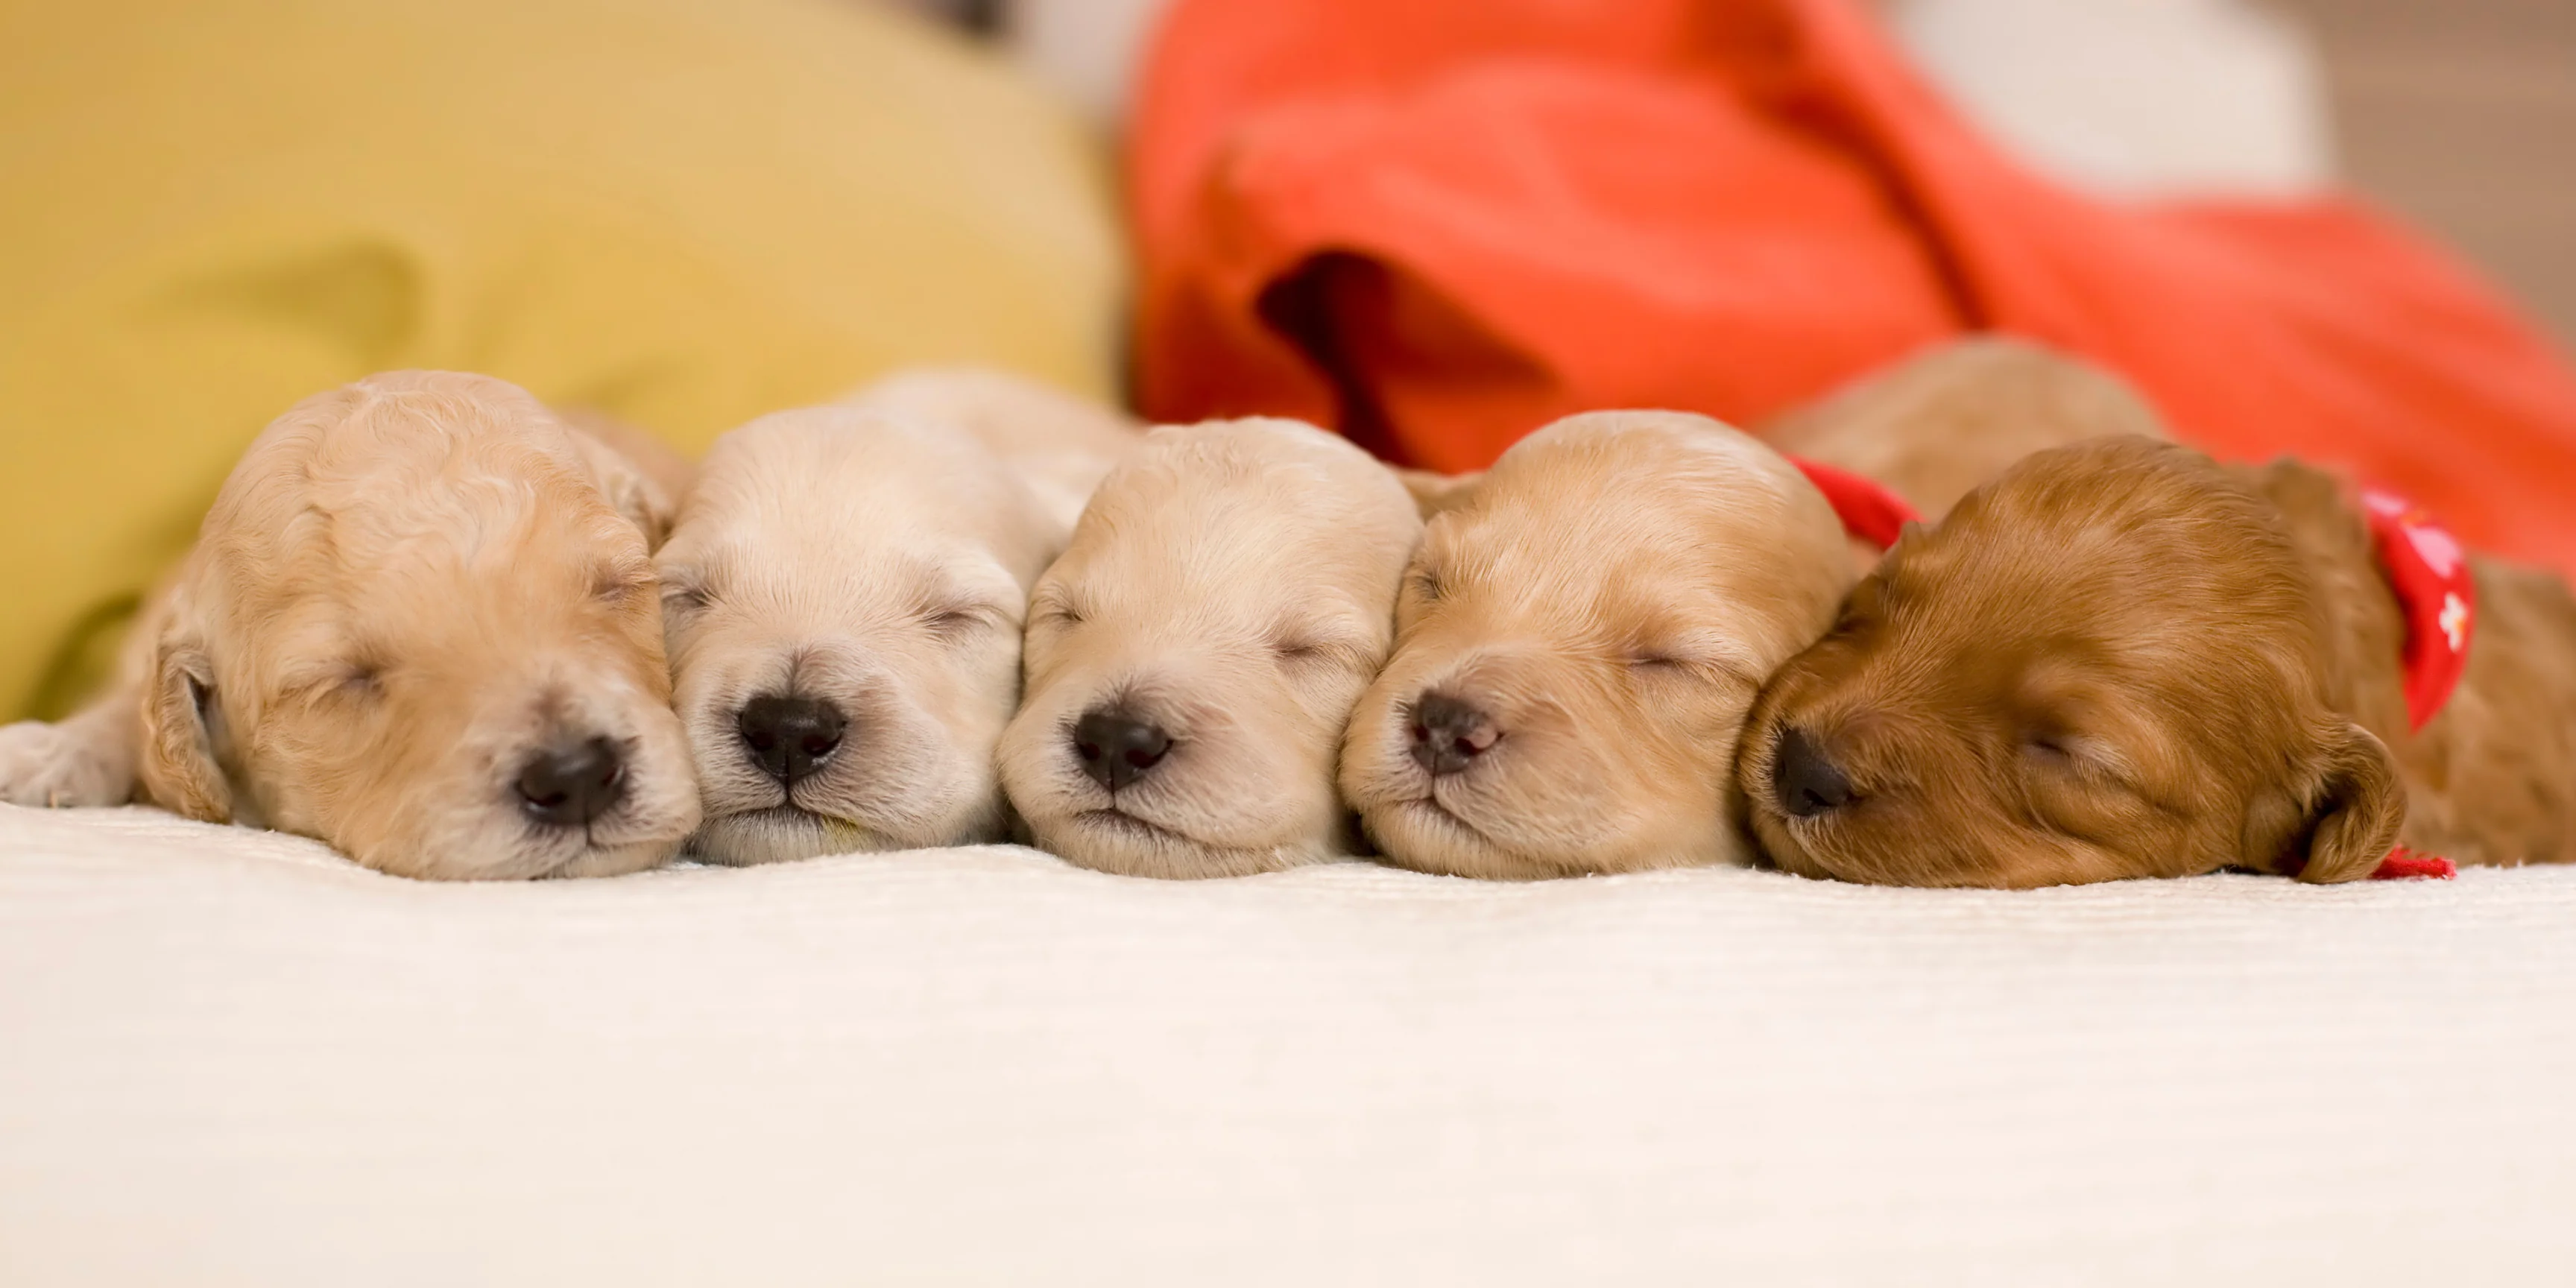 five newborn puppies